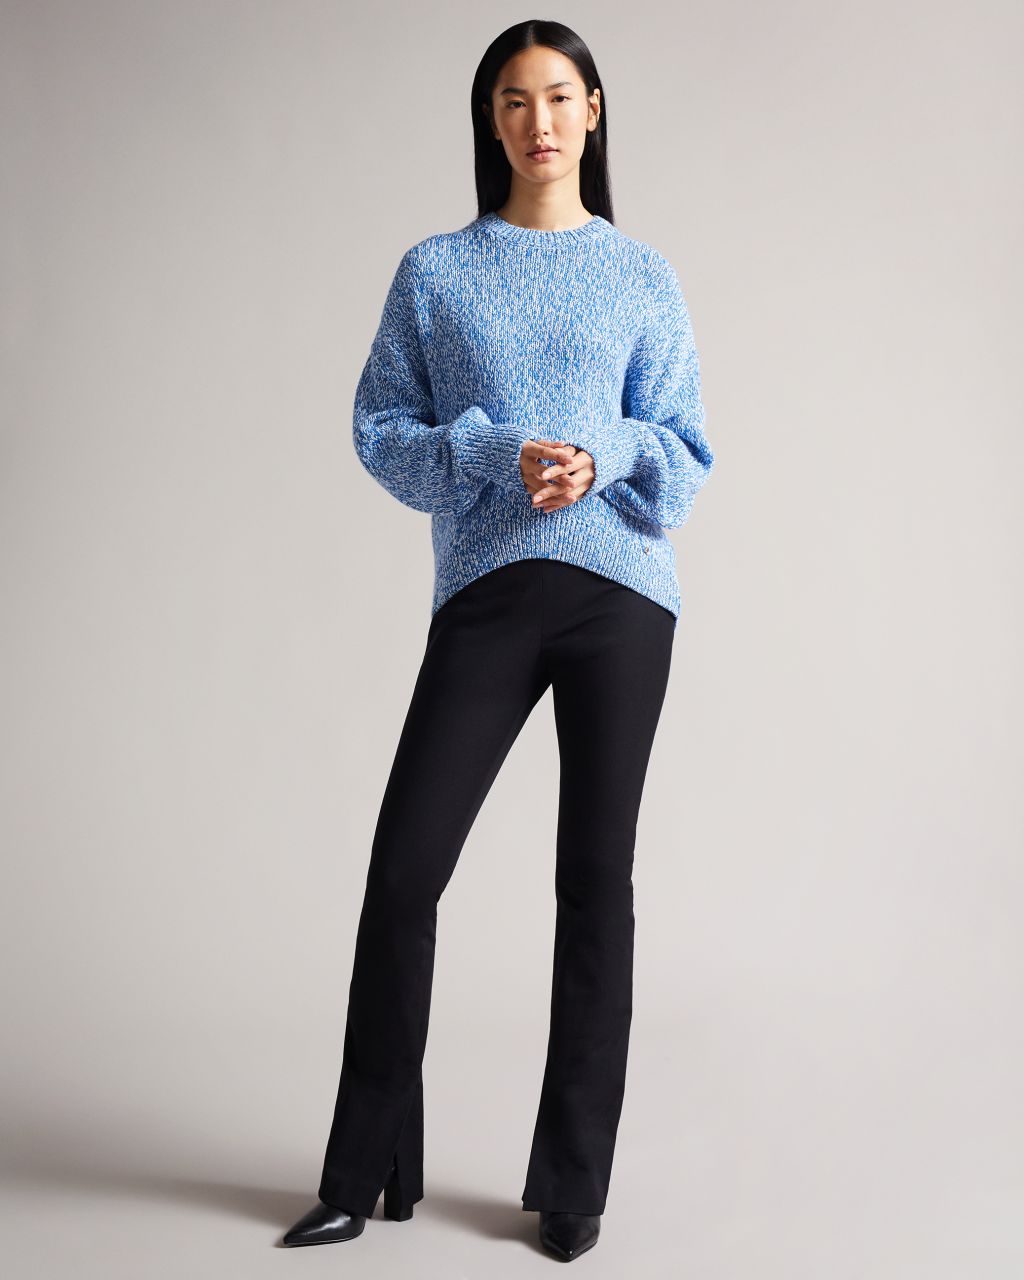 Ted Baker Women's Twisted Yarn Curved Hem Sweater in Bright Blue, Zzurii, Wool